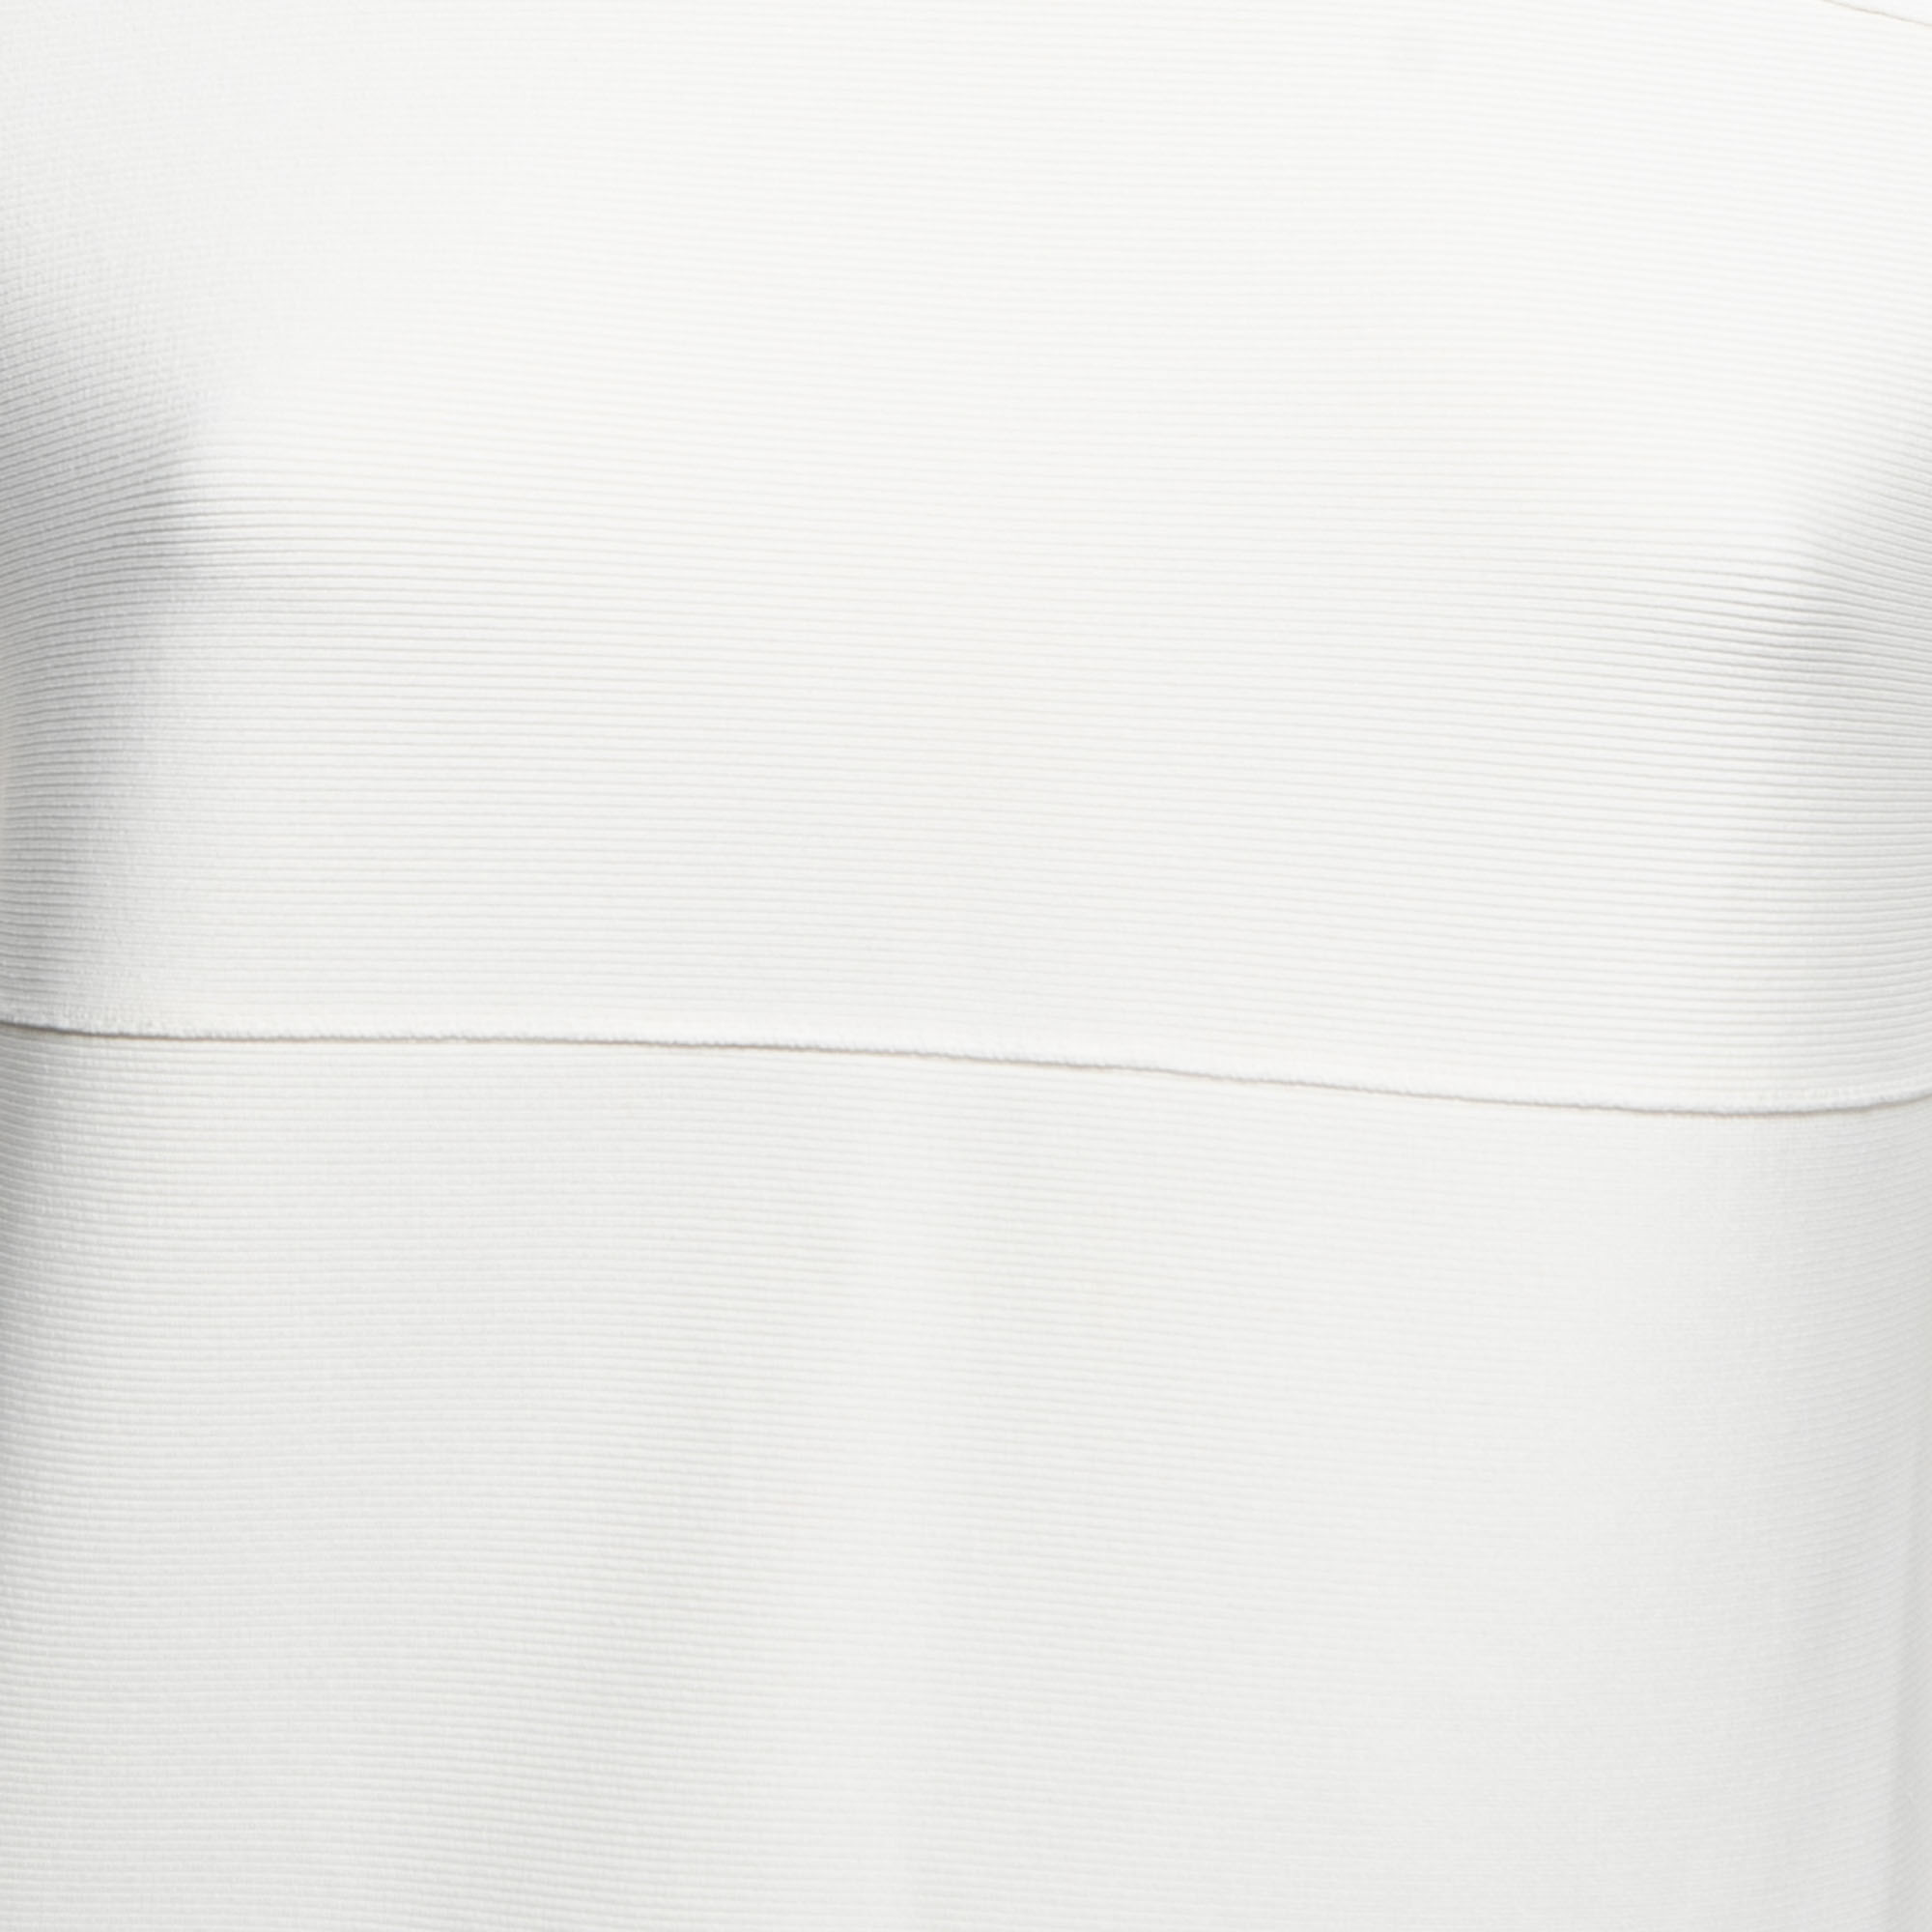 Herve Leger White Bandage Knit Crewneck Short Sleeve Mini Dress XS